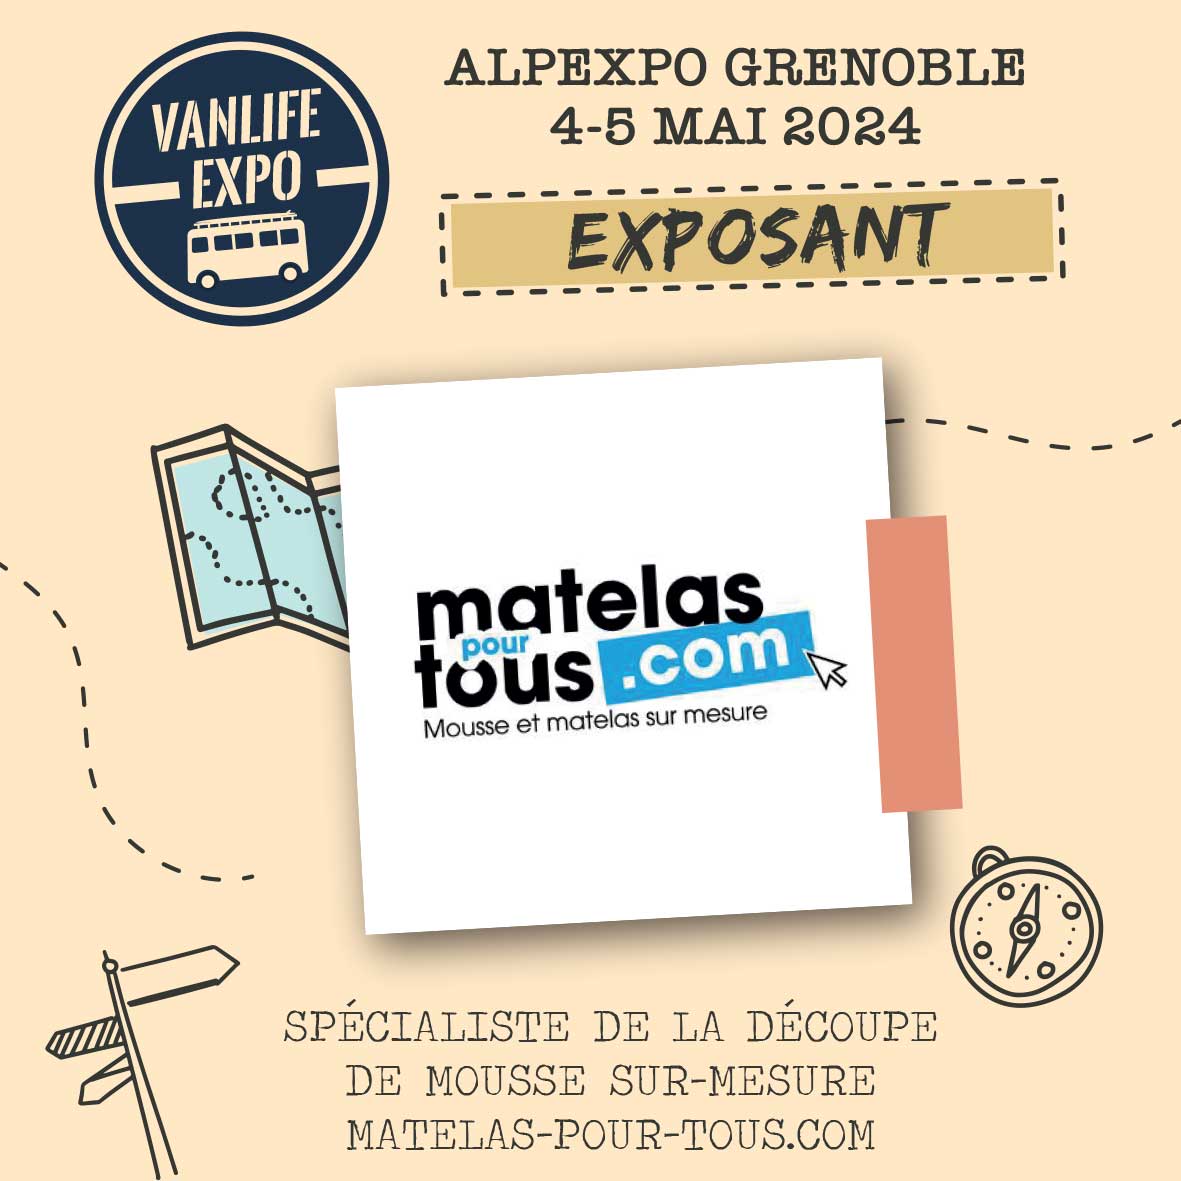 Featured image for “Matelas pour tous”